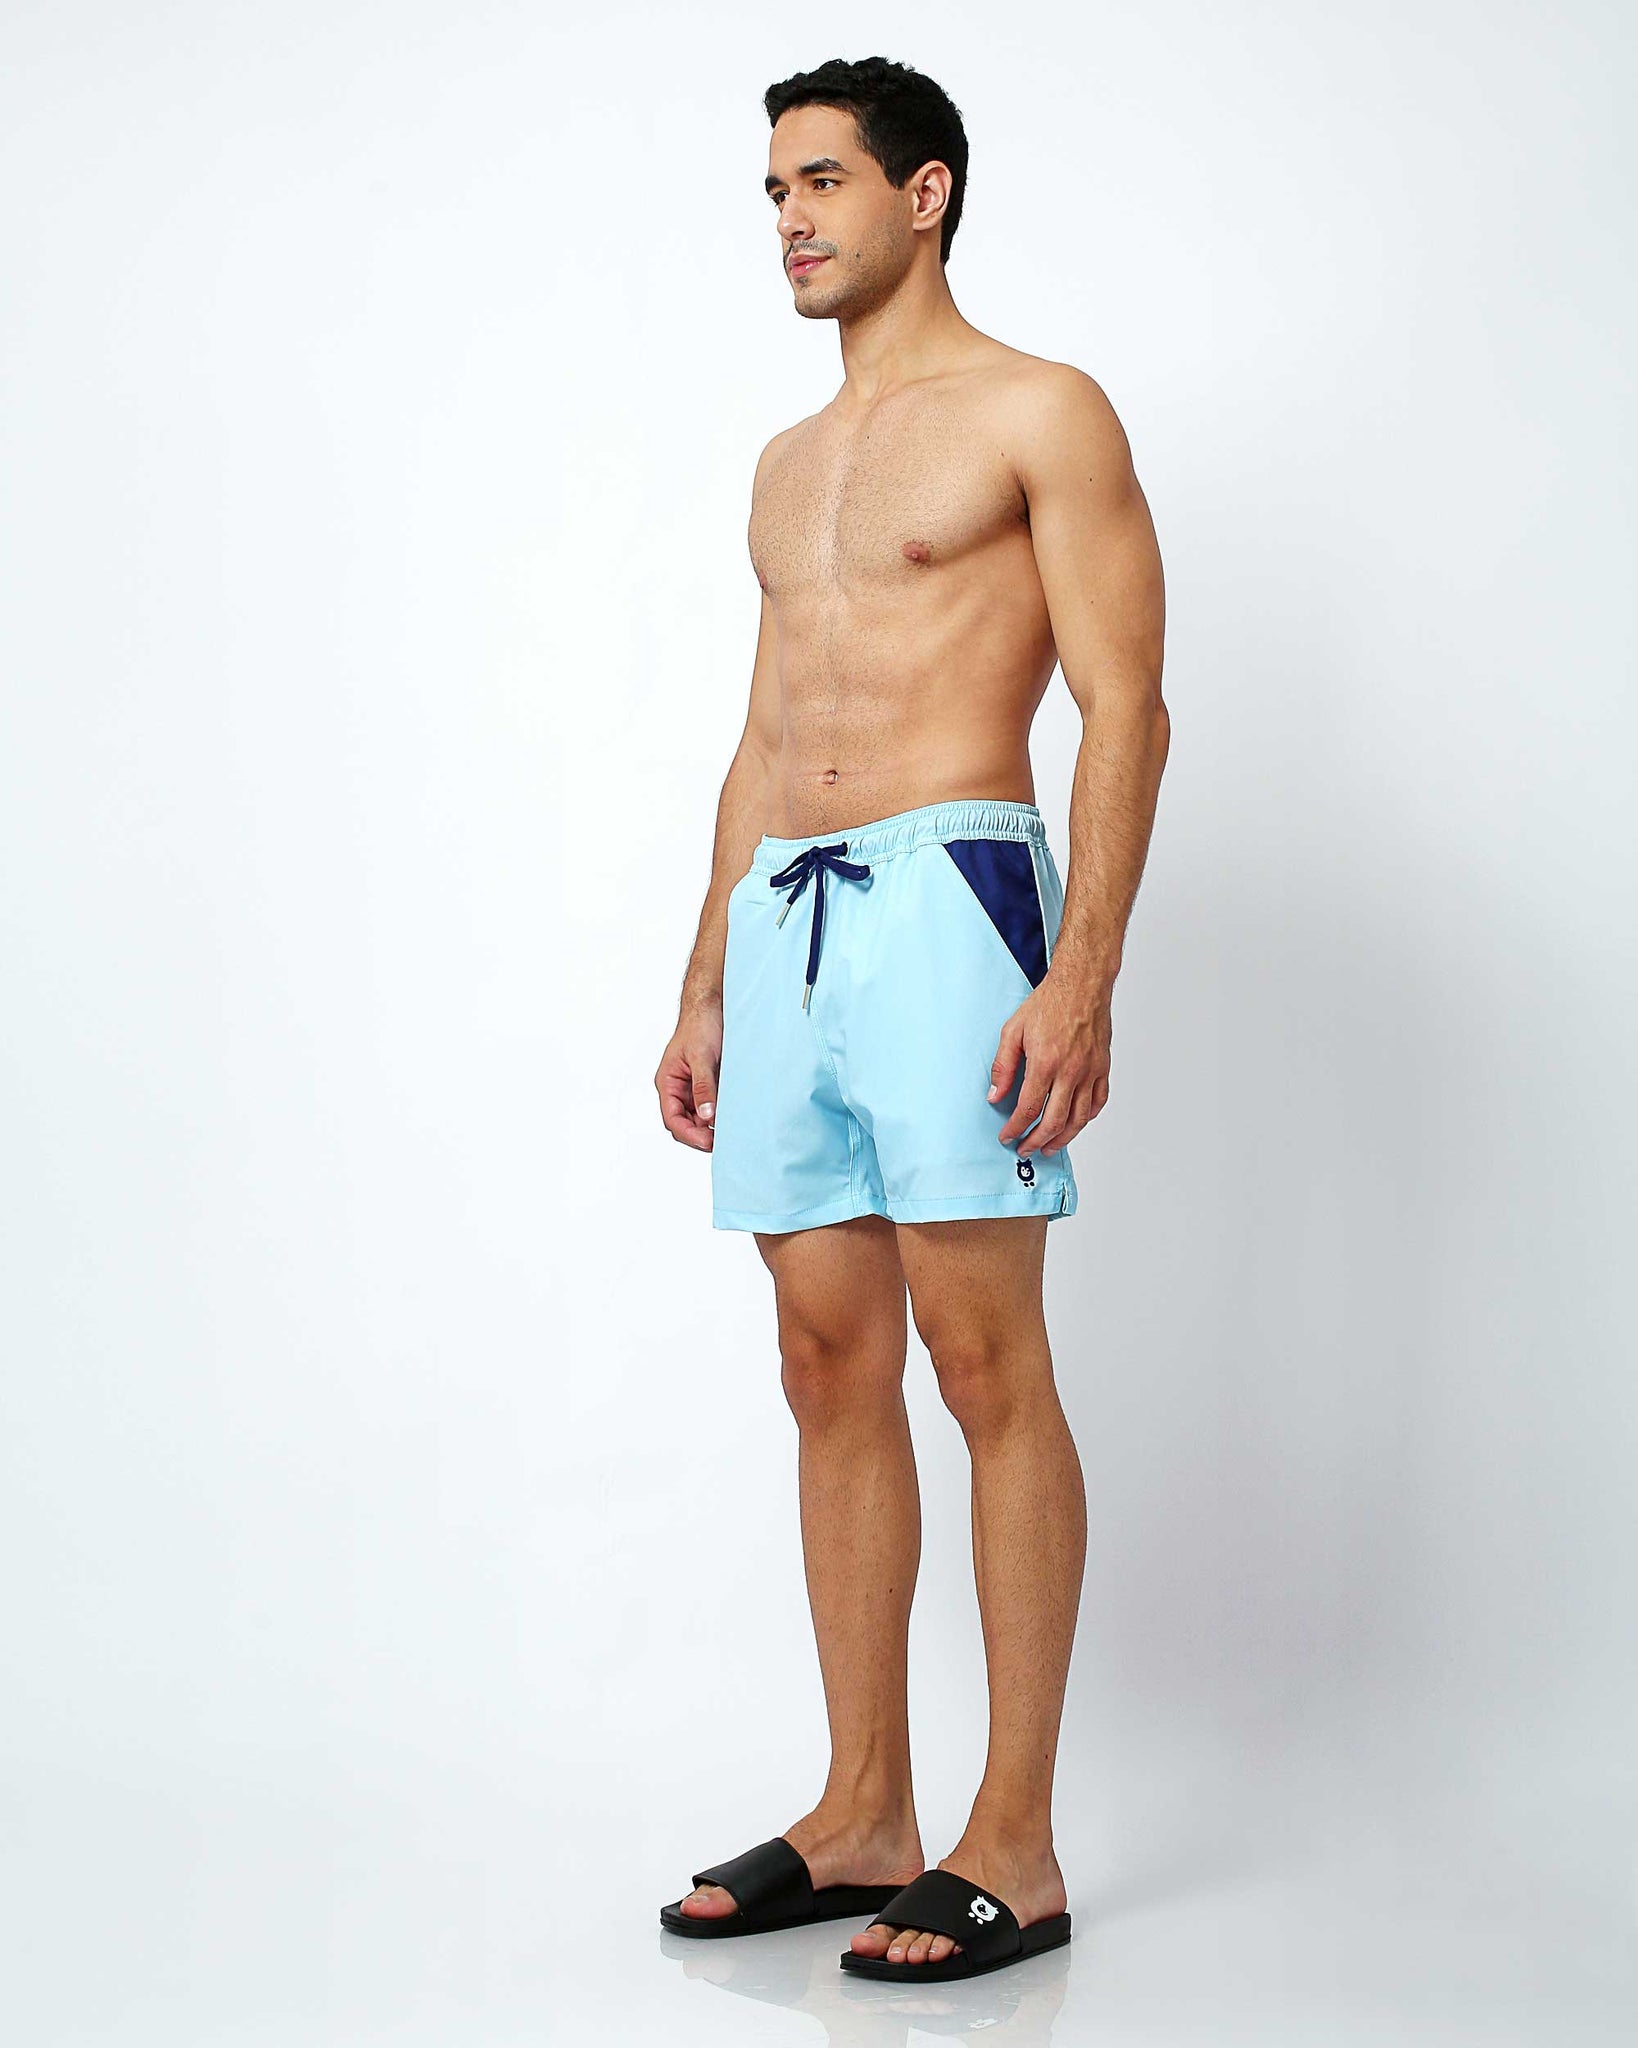 Baby Blue - Men's Swim Shorts